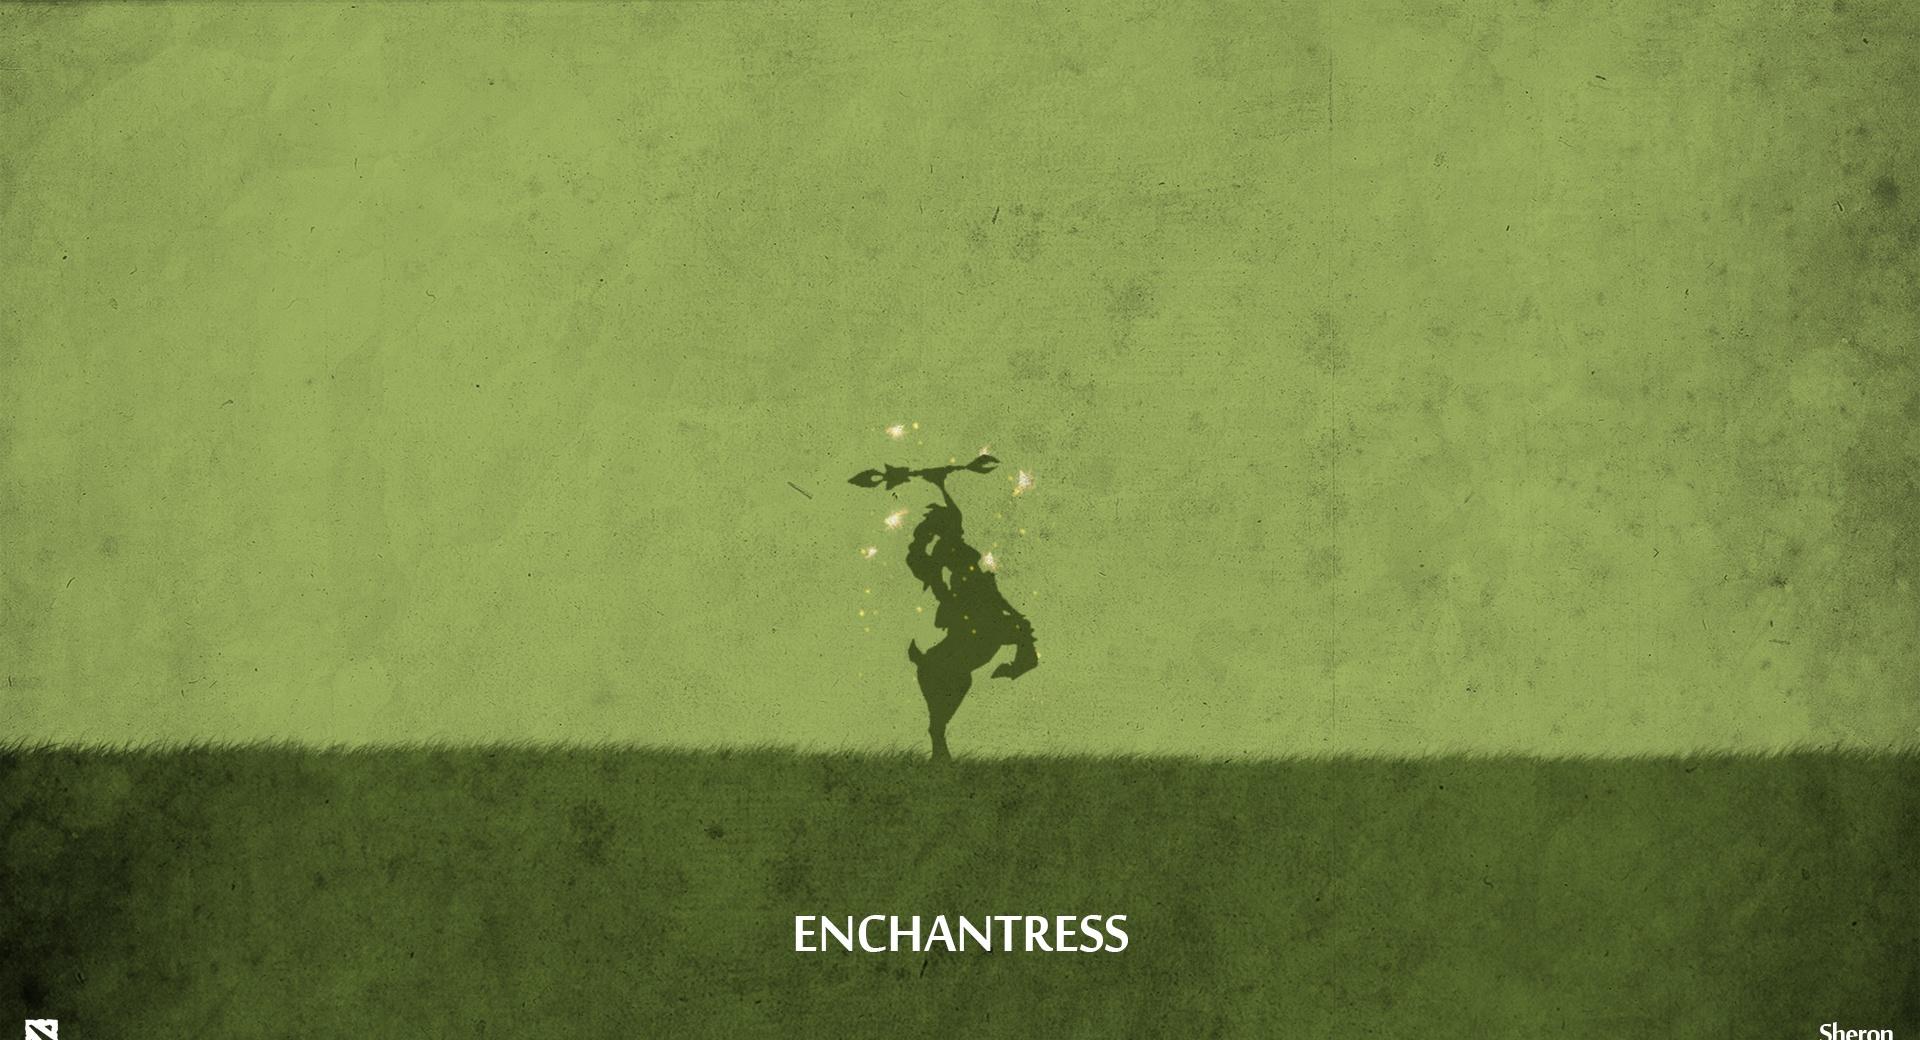 Enchantress - DotA 2 at 1152 x 864 size wallpapers HD quality